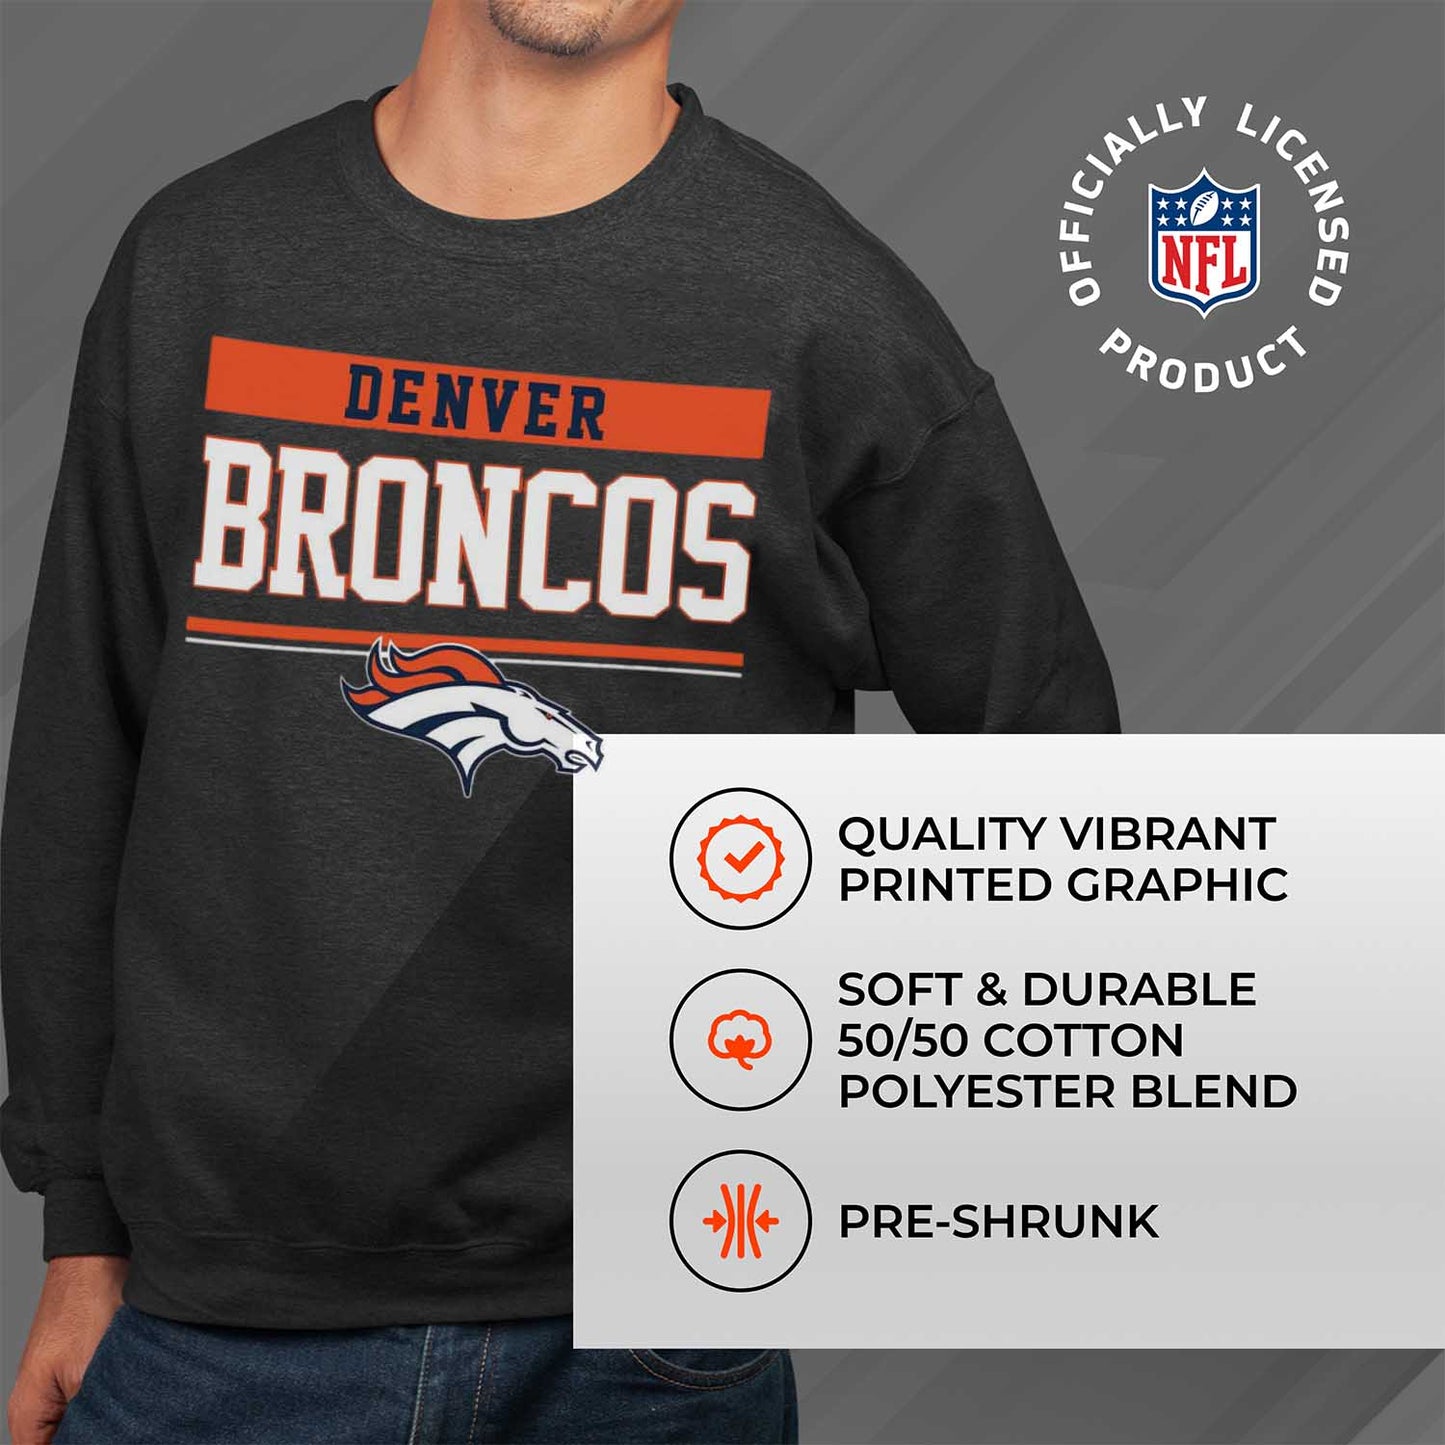 Denver Broncos NFL Adult Long Sleeve Team Block Charcoal Crewneck Sweatshirt - Charcoal